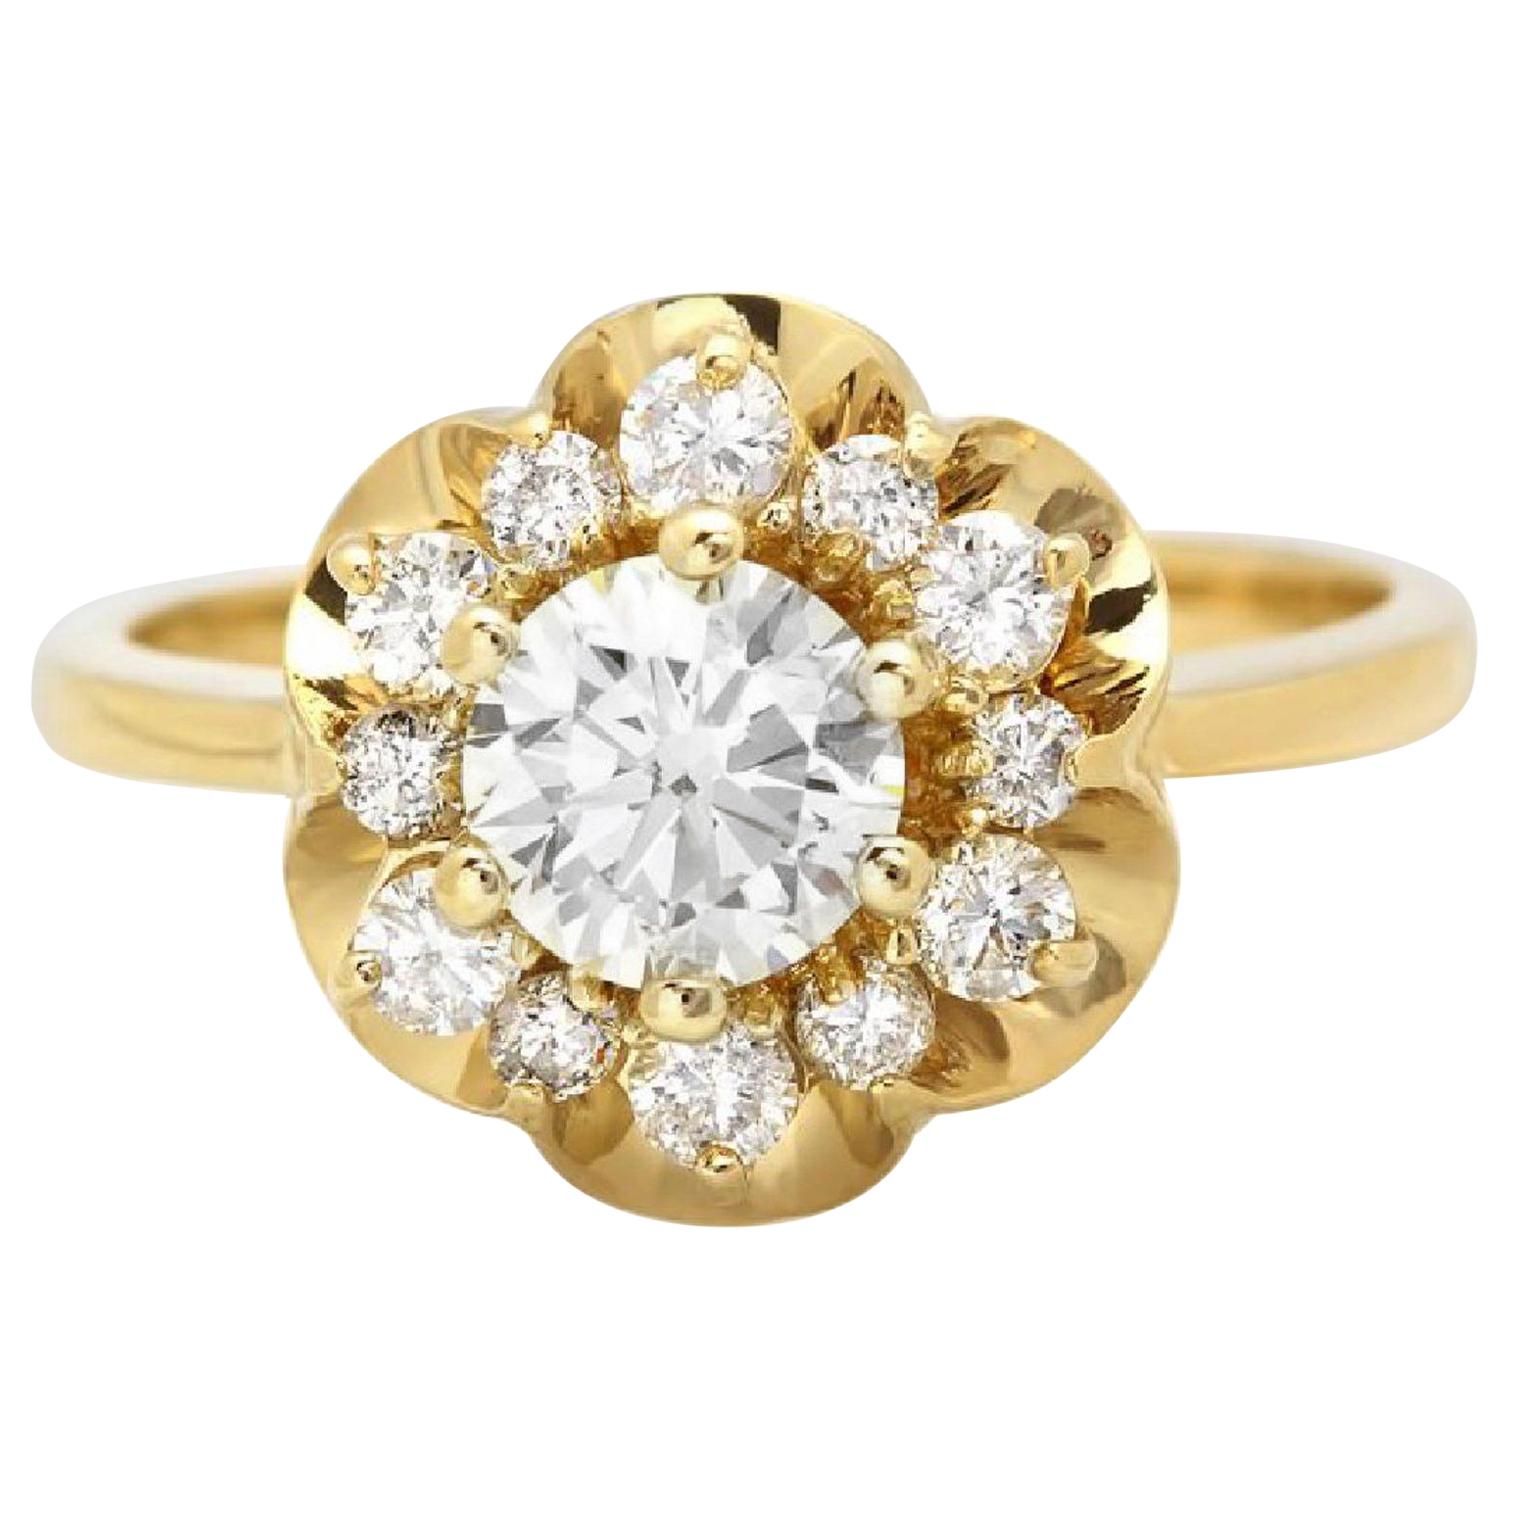 Splendid 1.15 Carat Natural Diamond 14 Karat Solid Yellow Gold Ring For Sale